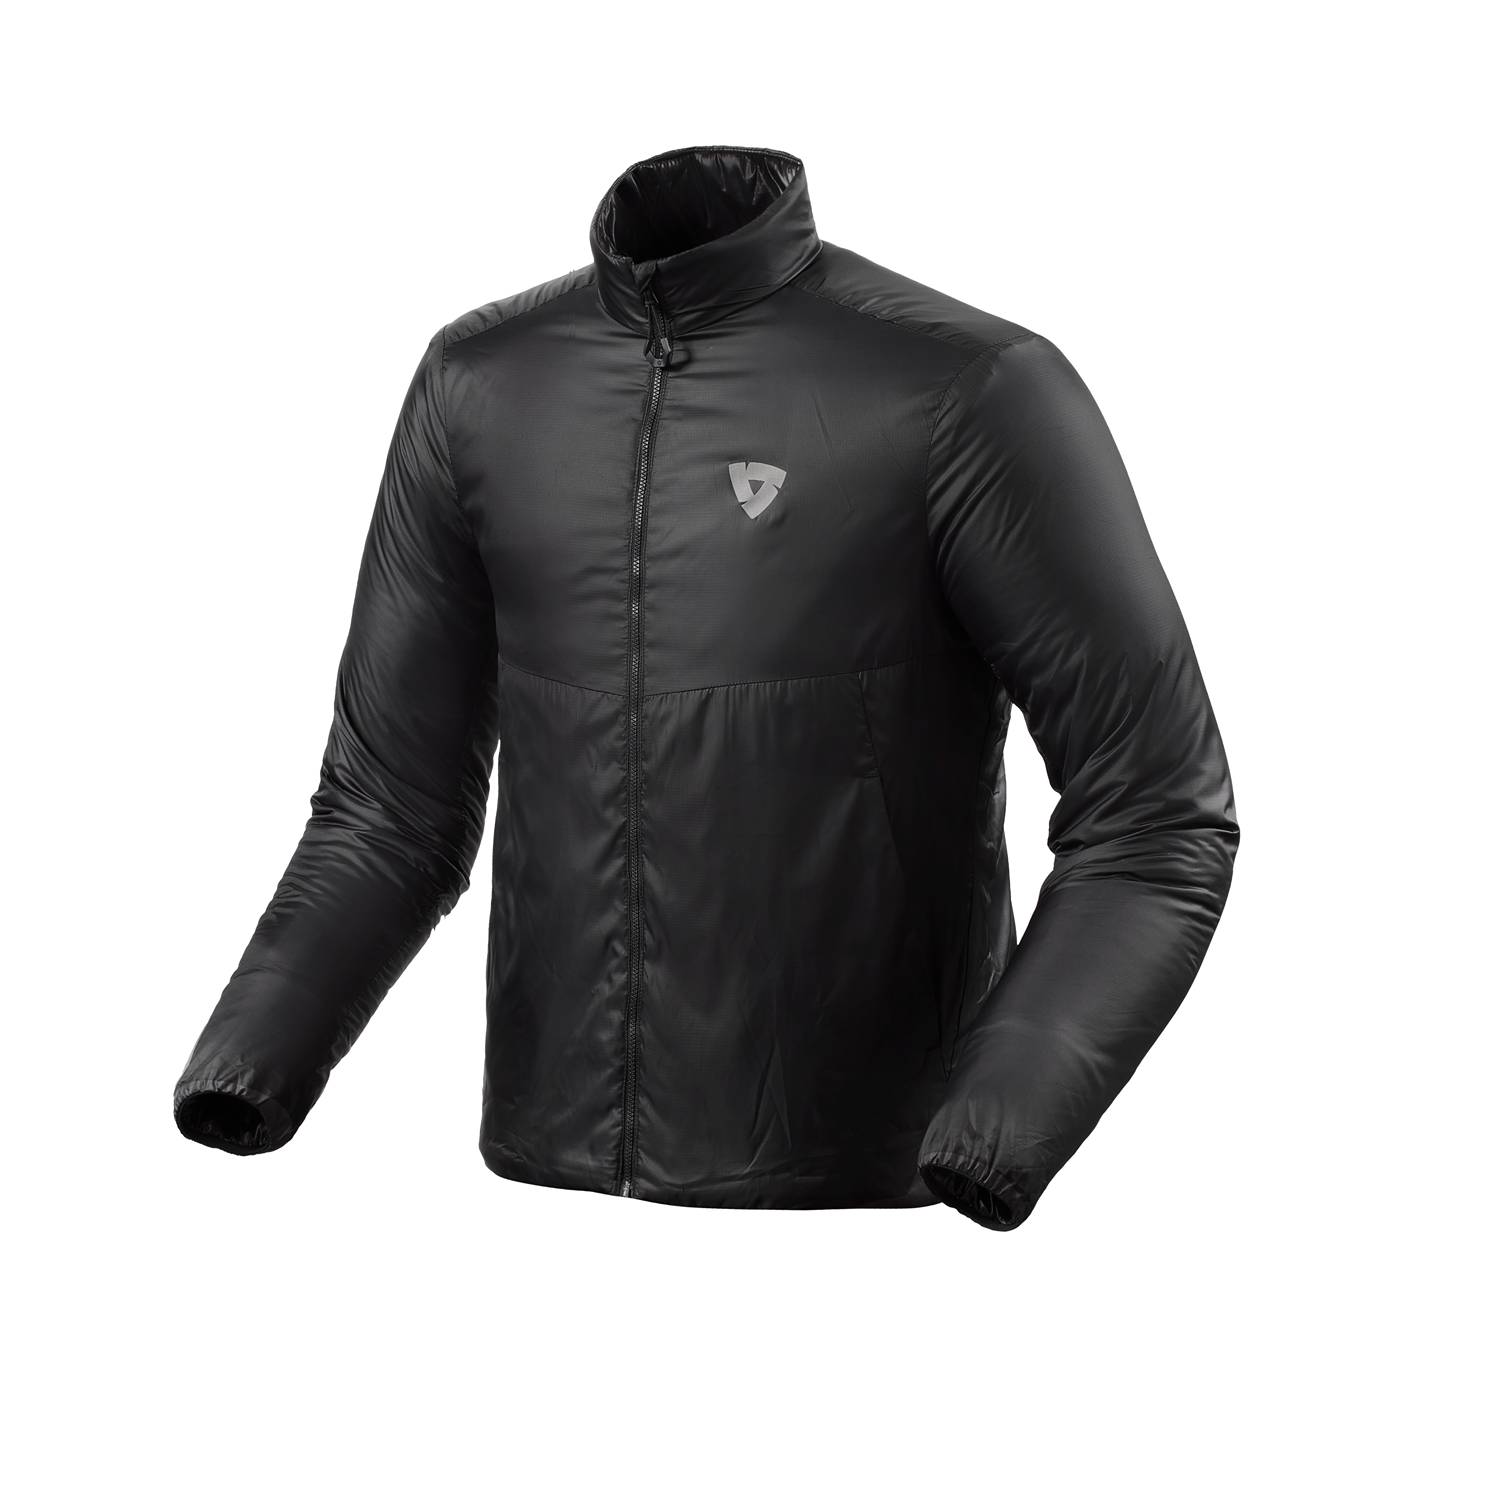 Image of REV'IT! Core 2 Mid Layer Jacket Black Größe S